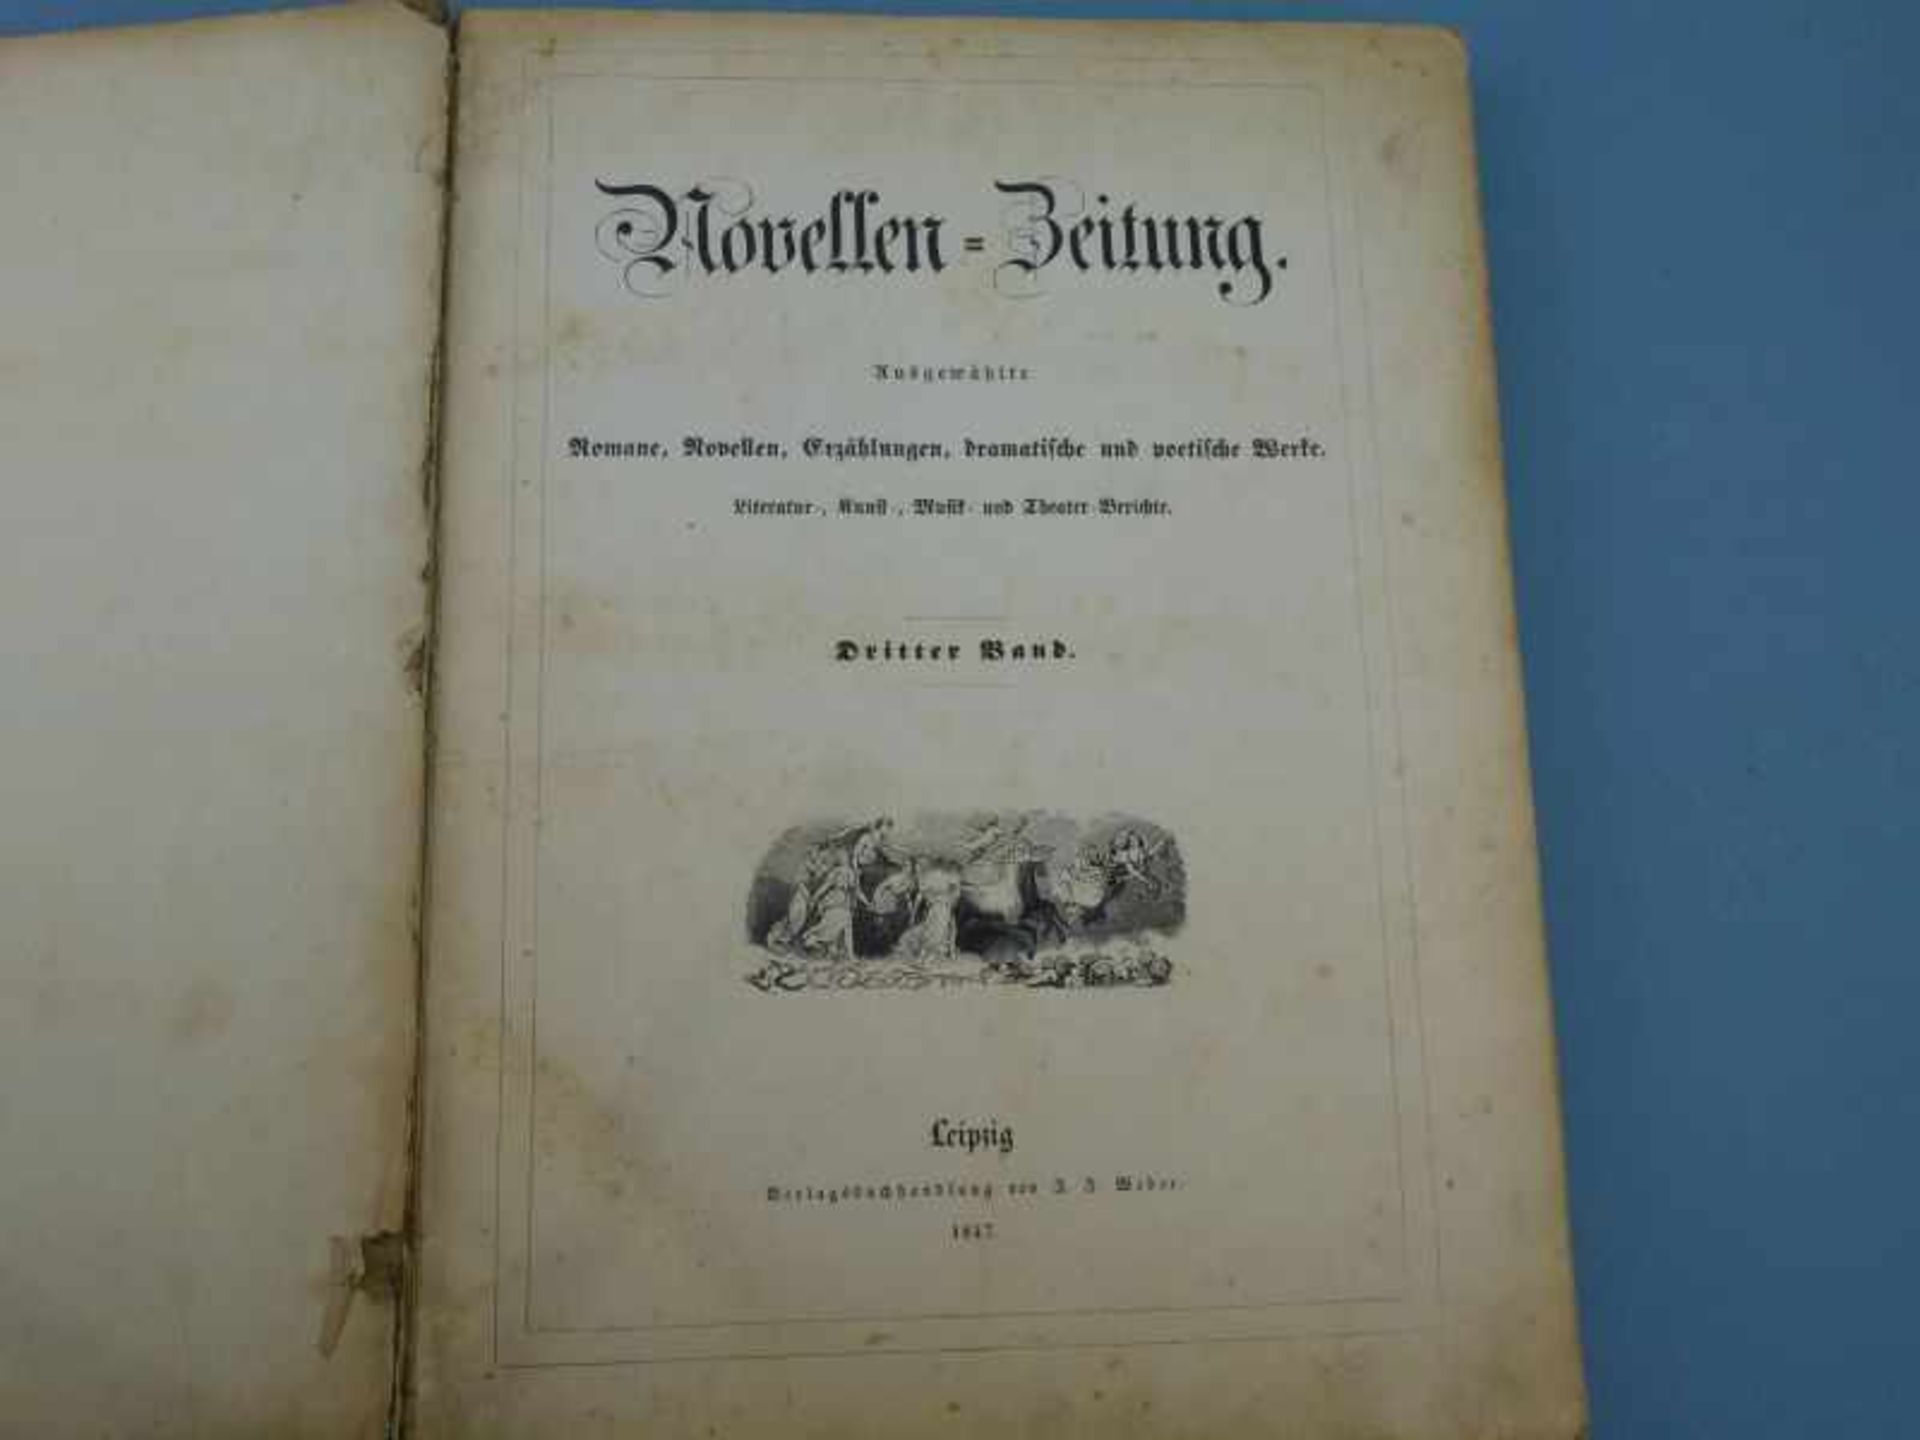 "Novellen-Zeitung", Leipzig 1847 3. Band, Verlagsbuchhandlung J.J. Weber, 416 Seiten,36x27cm - Bild 2 aus 2